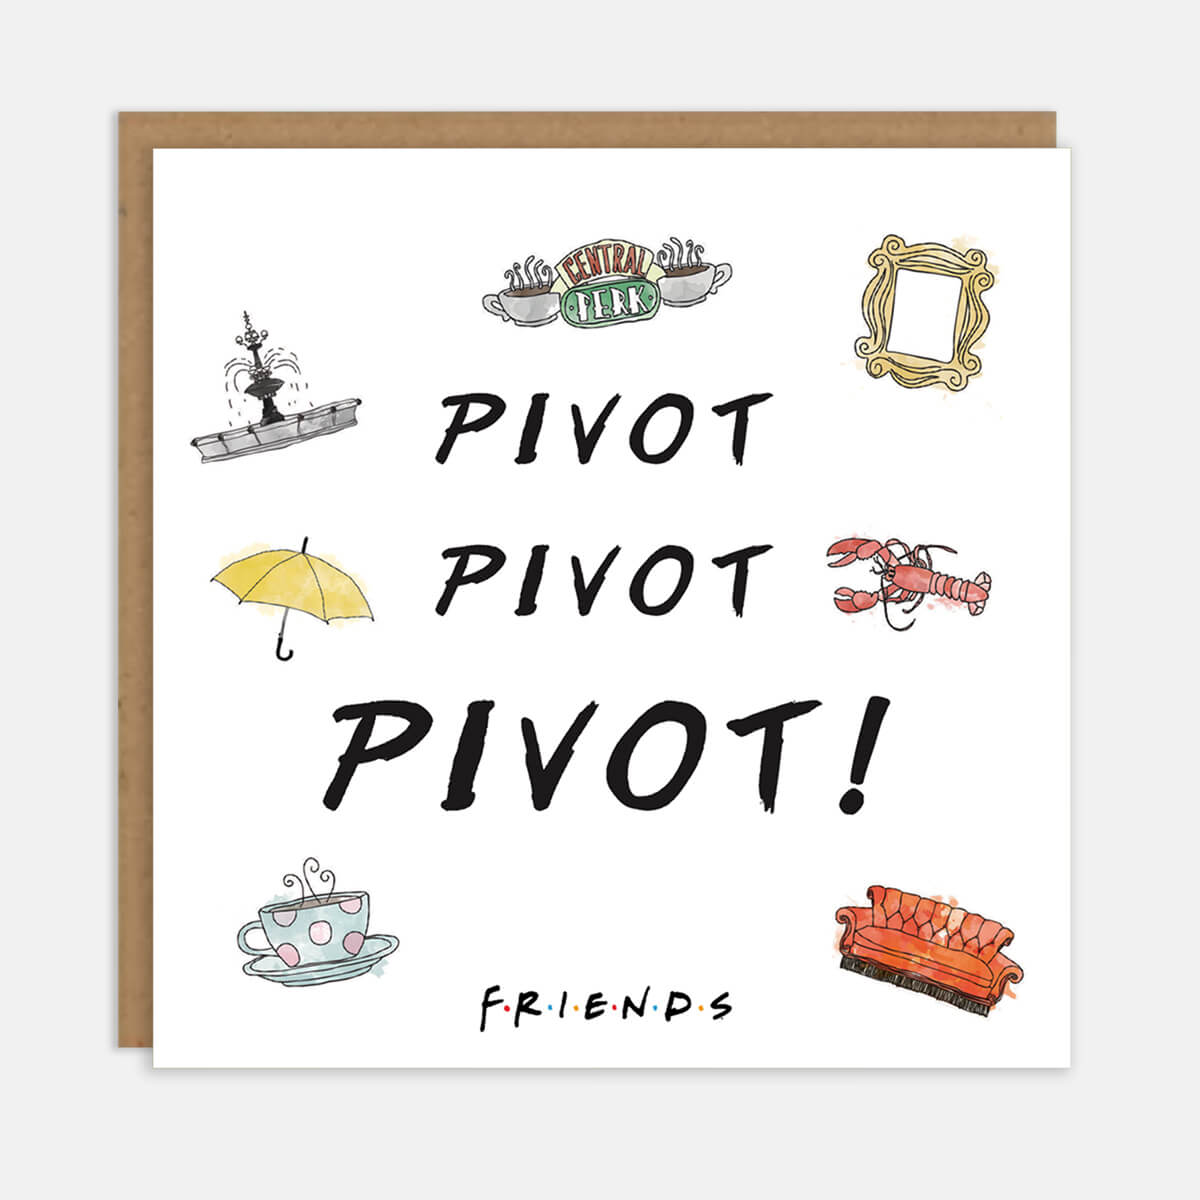 Friends TV Show New Home Card which reads "Pivot, Pivot, Pivot!"